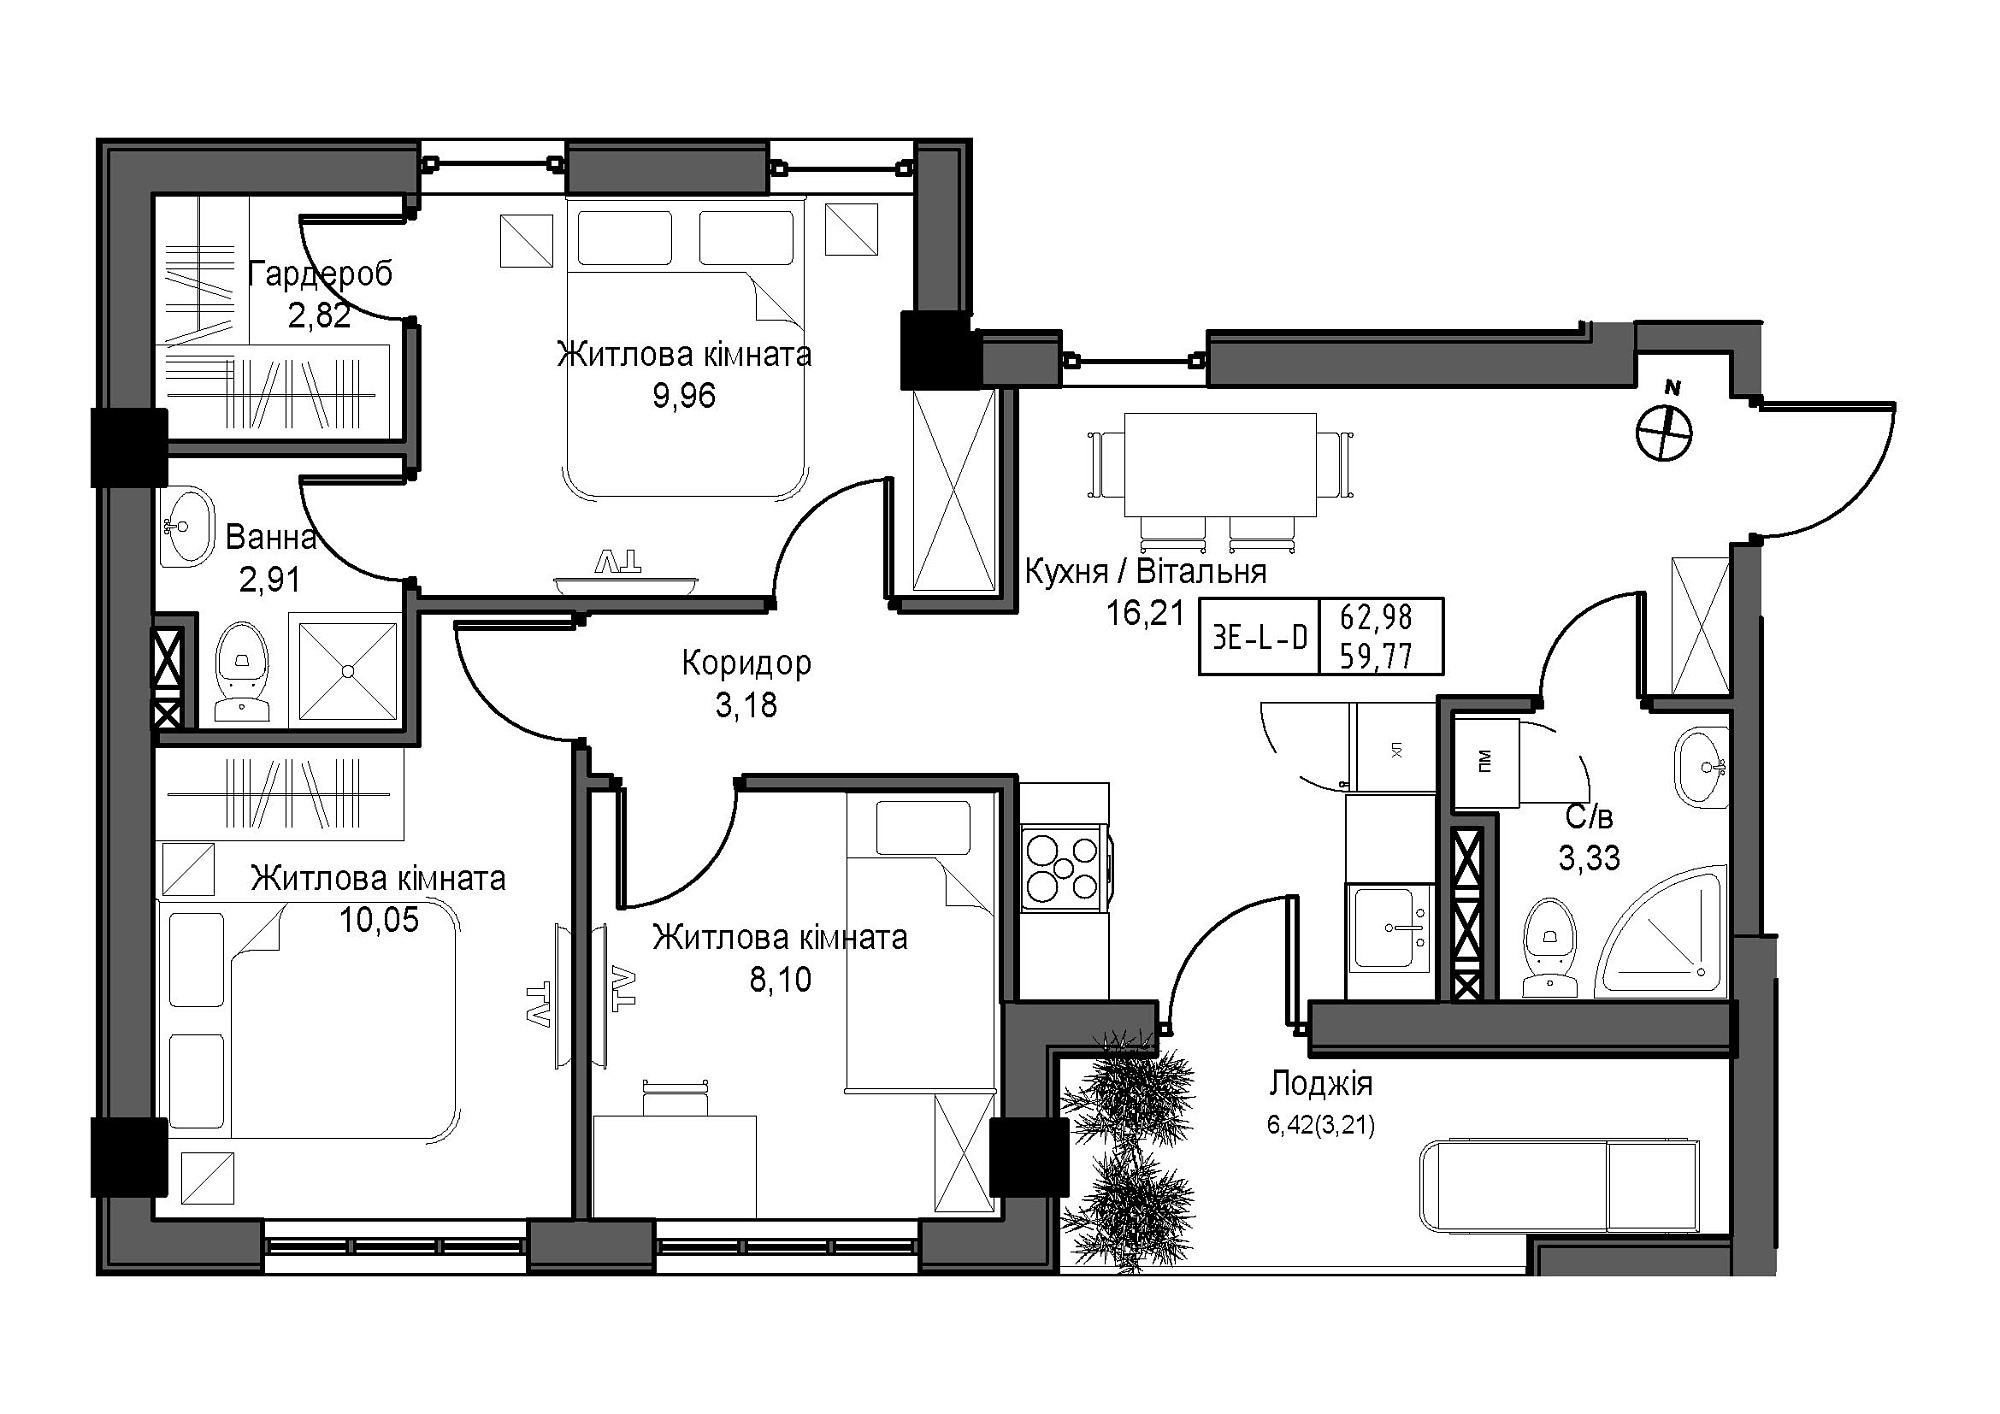 Планування 3-к квартира площею 59.77м2, UM-007-04/0012.